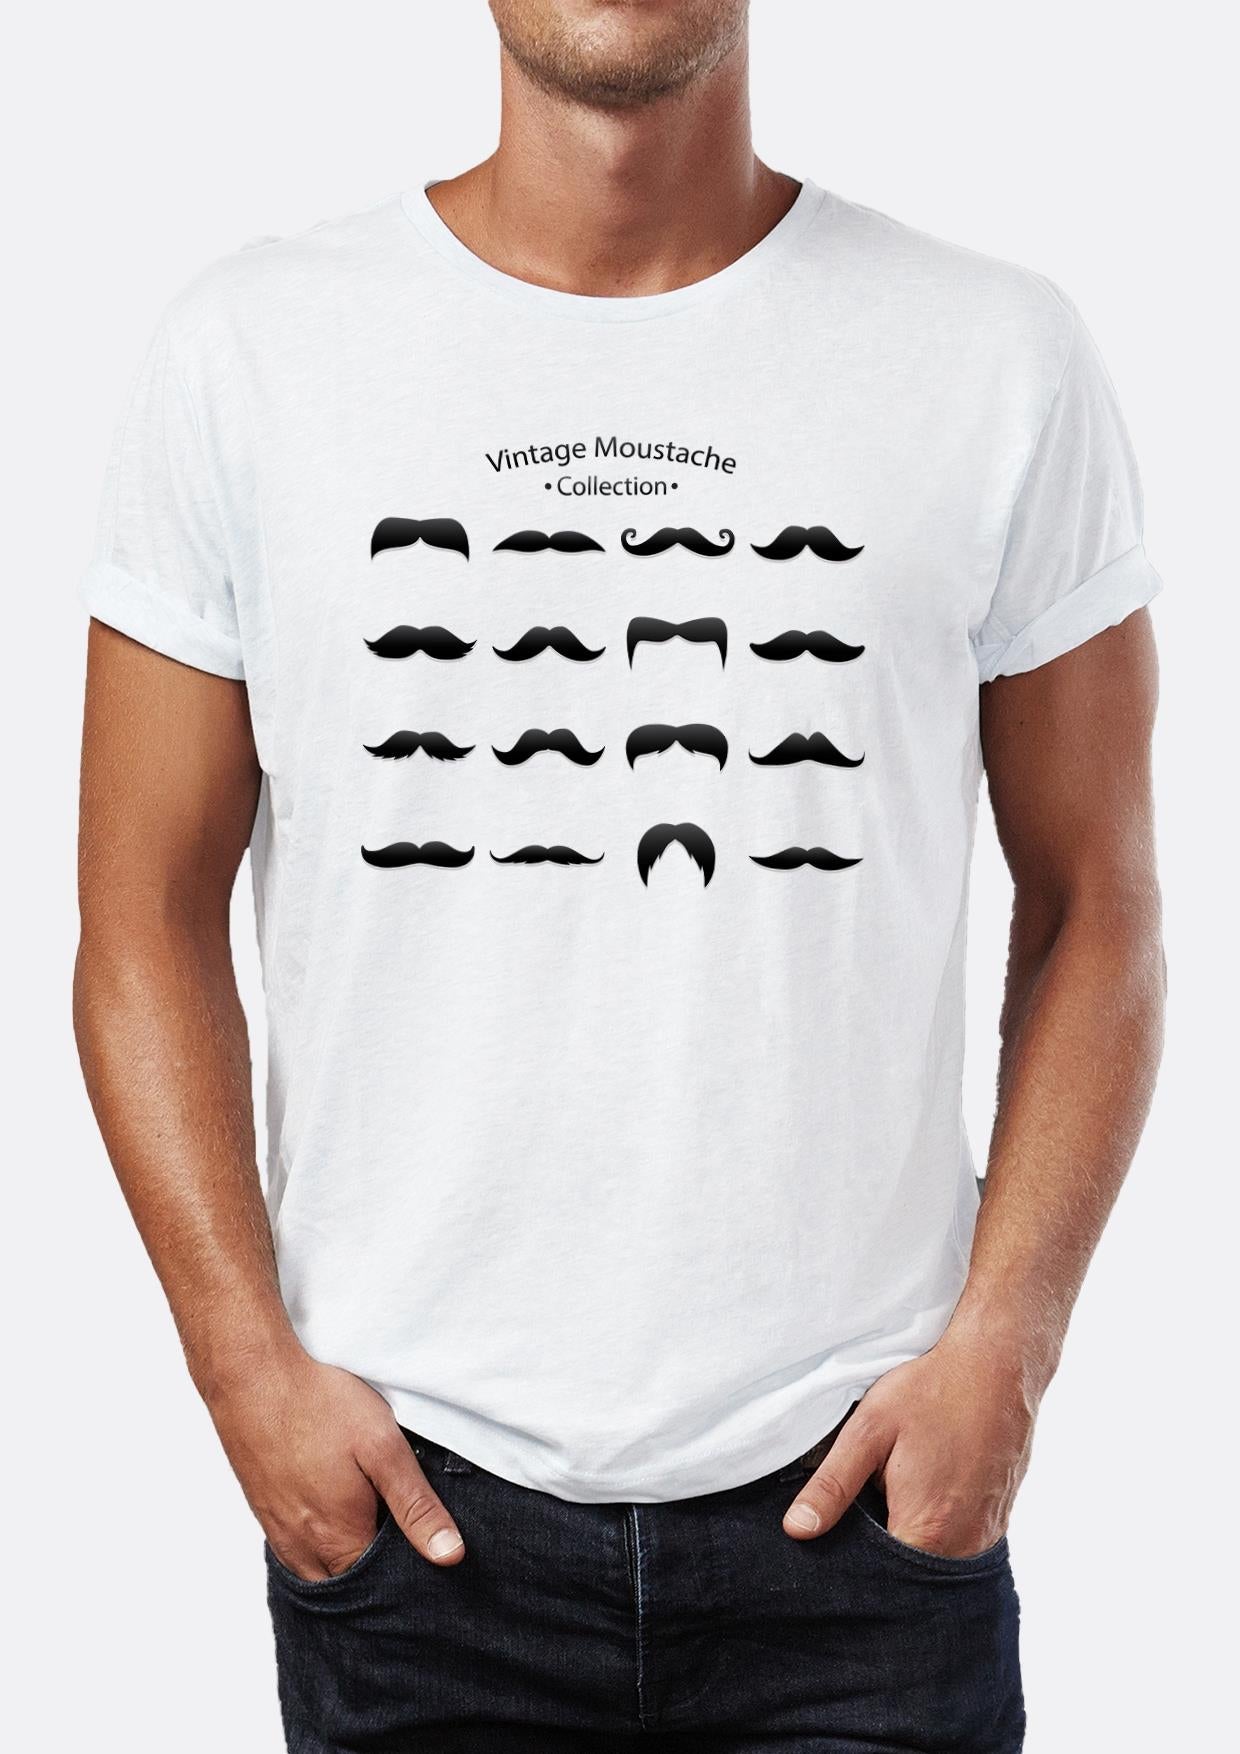 Mustache mustache collection illustration printed Crew Neck men's t -shirt